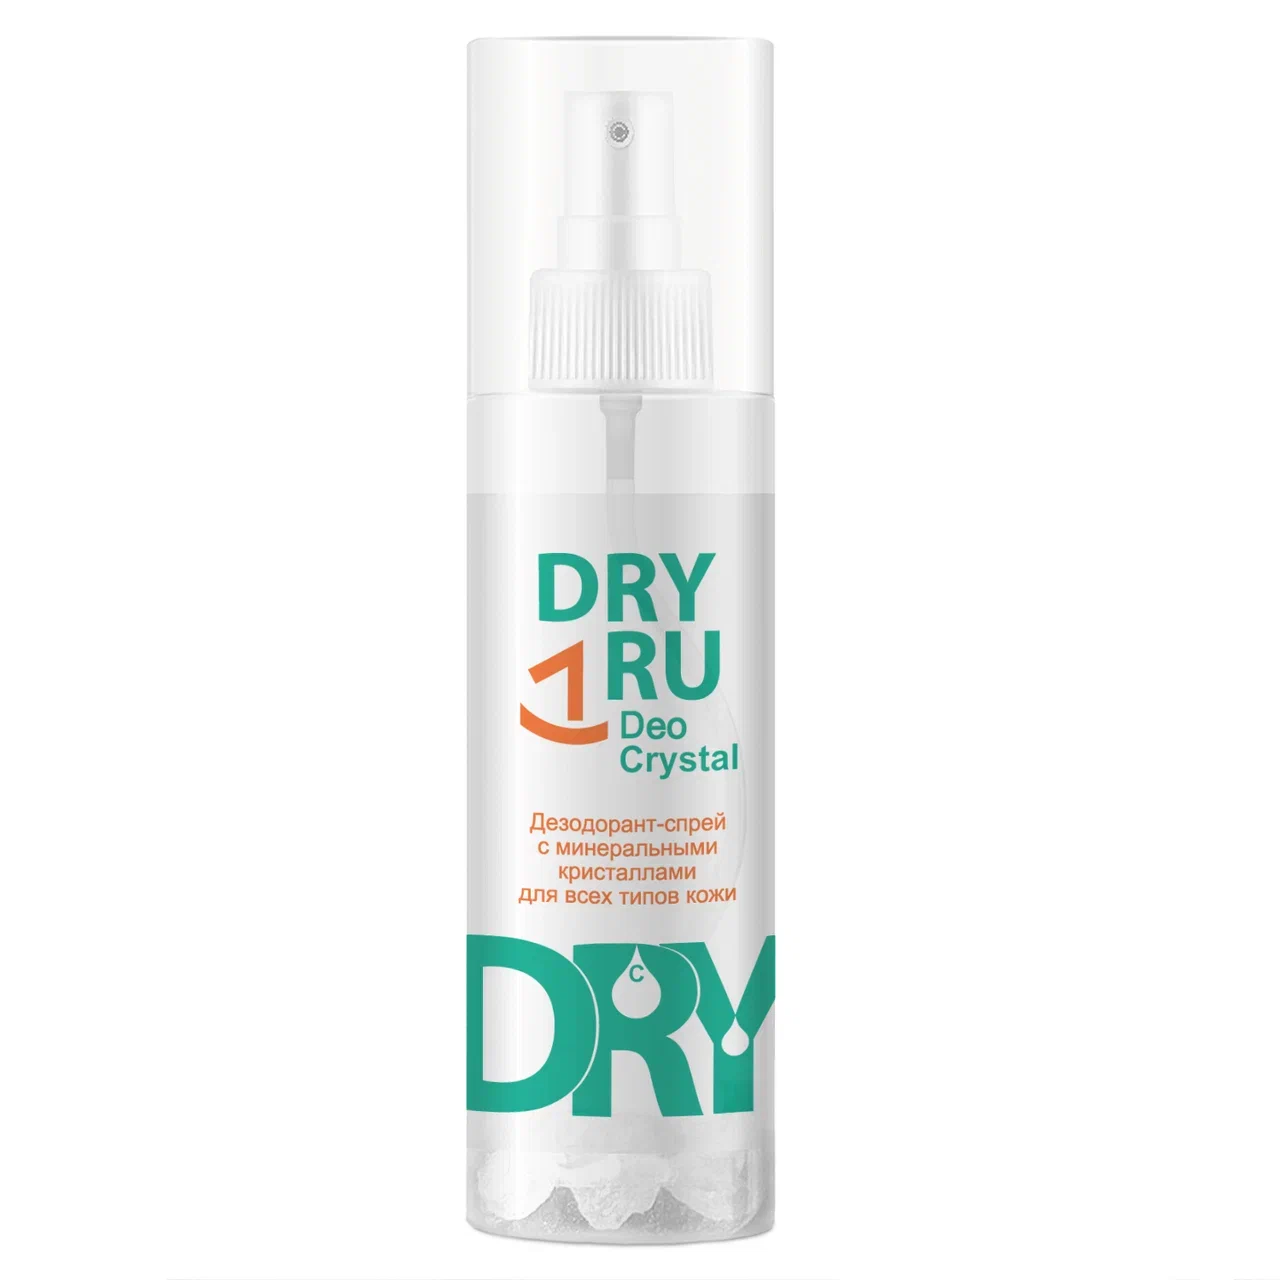 Дезодорант DRY RU Deo Crystal спрей, от пота и запаха, для подмышек, рук и ног 40 г ликвидатор пятен и запаха для собак mr fresh 3 в 1 спрей 500мл